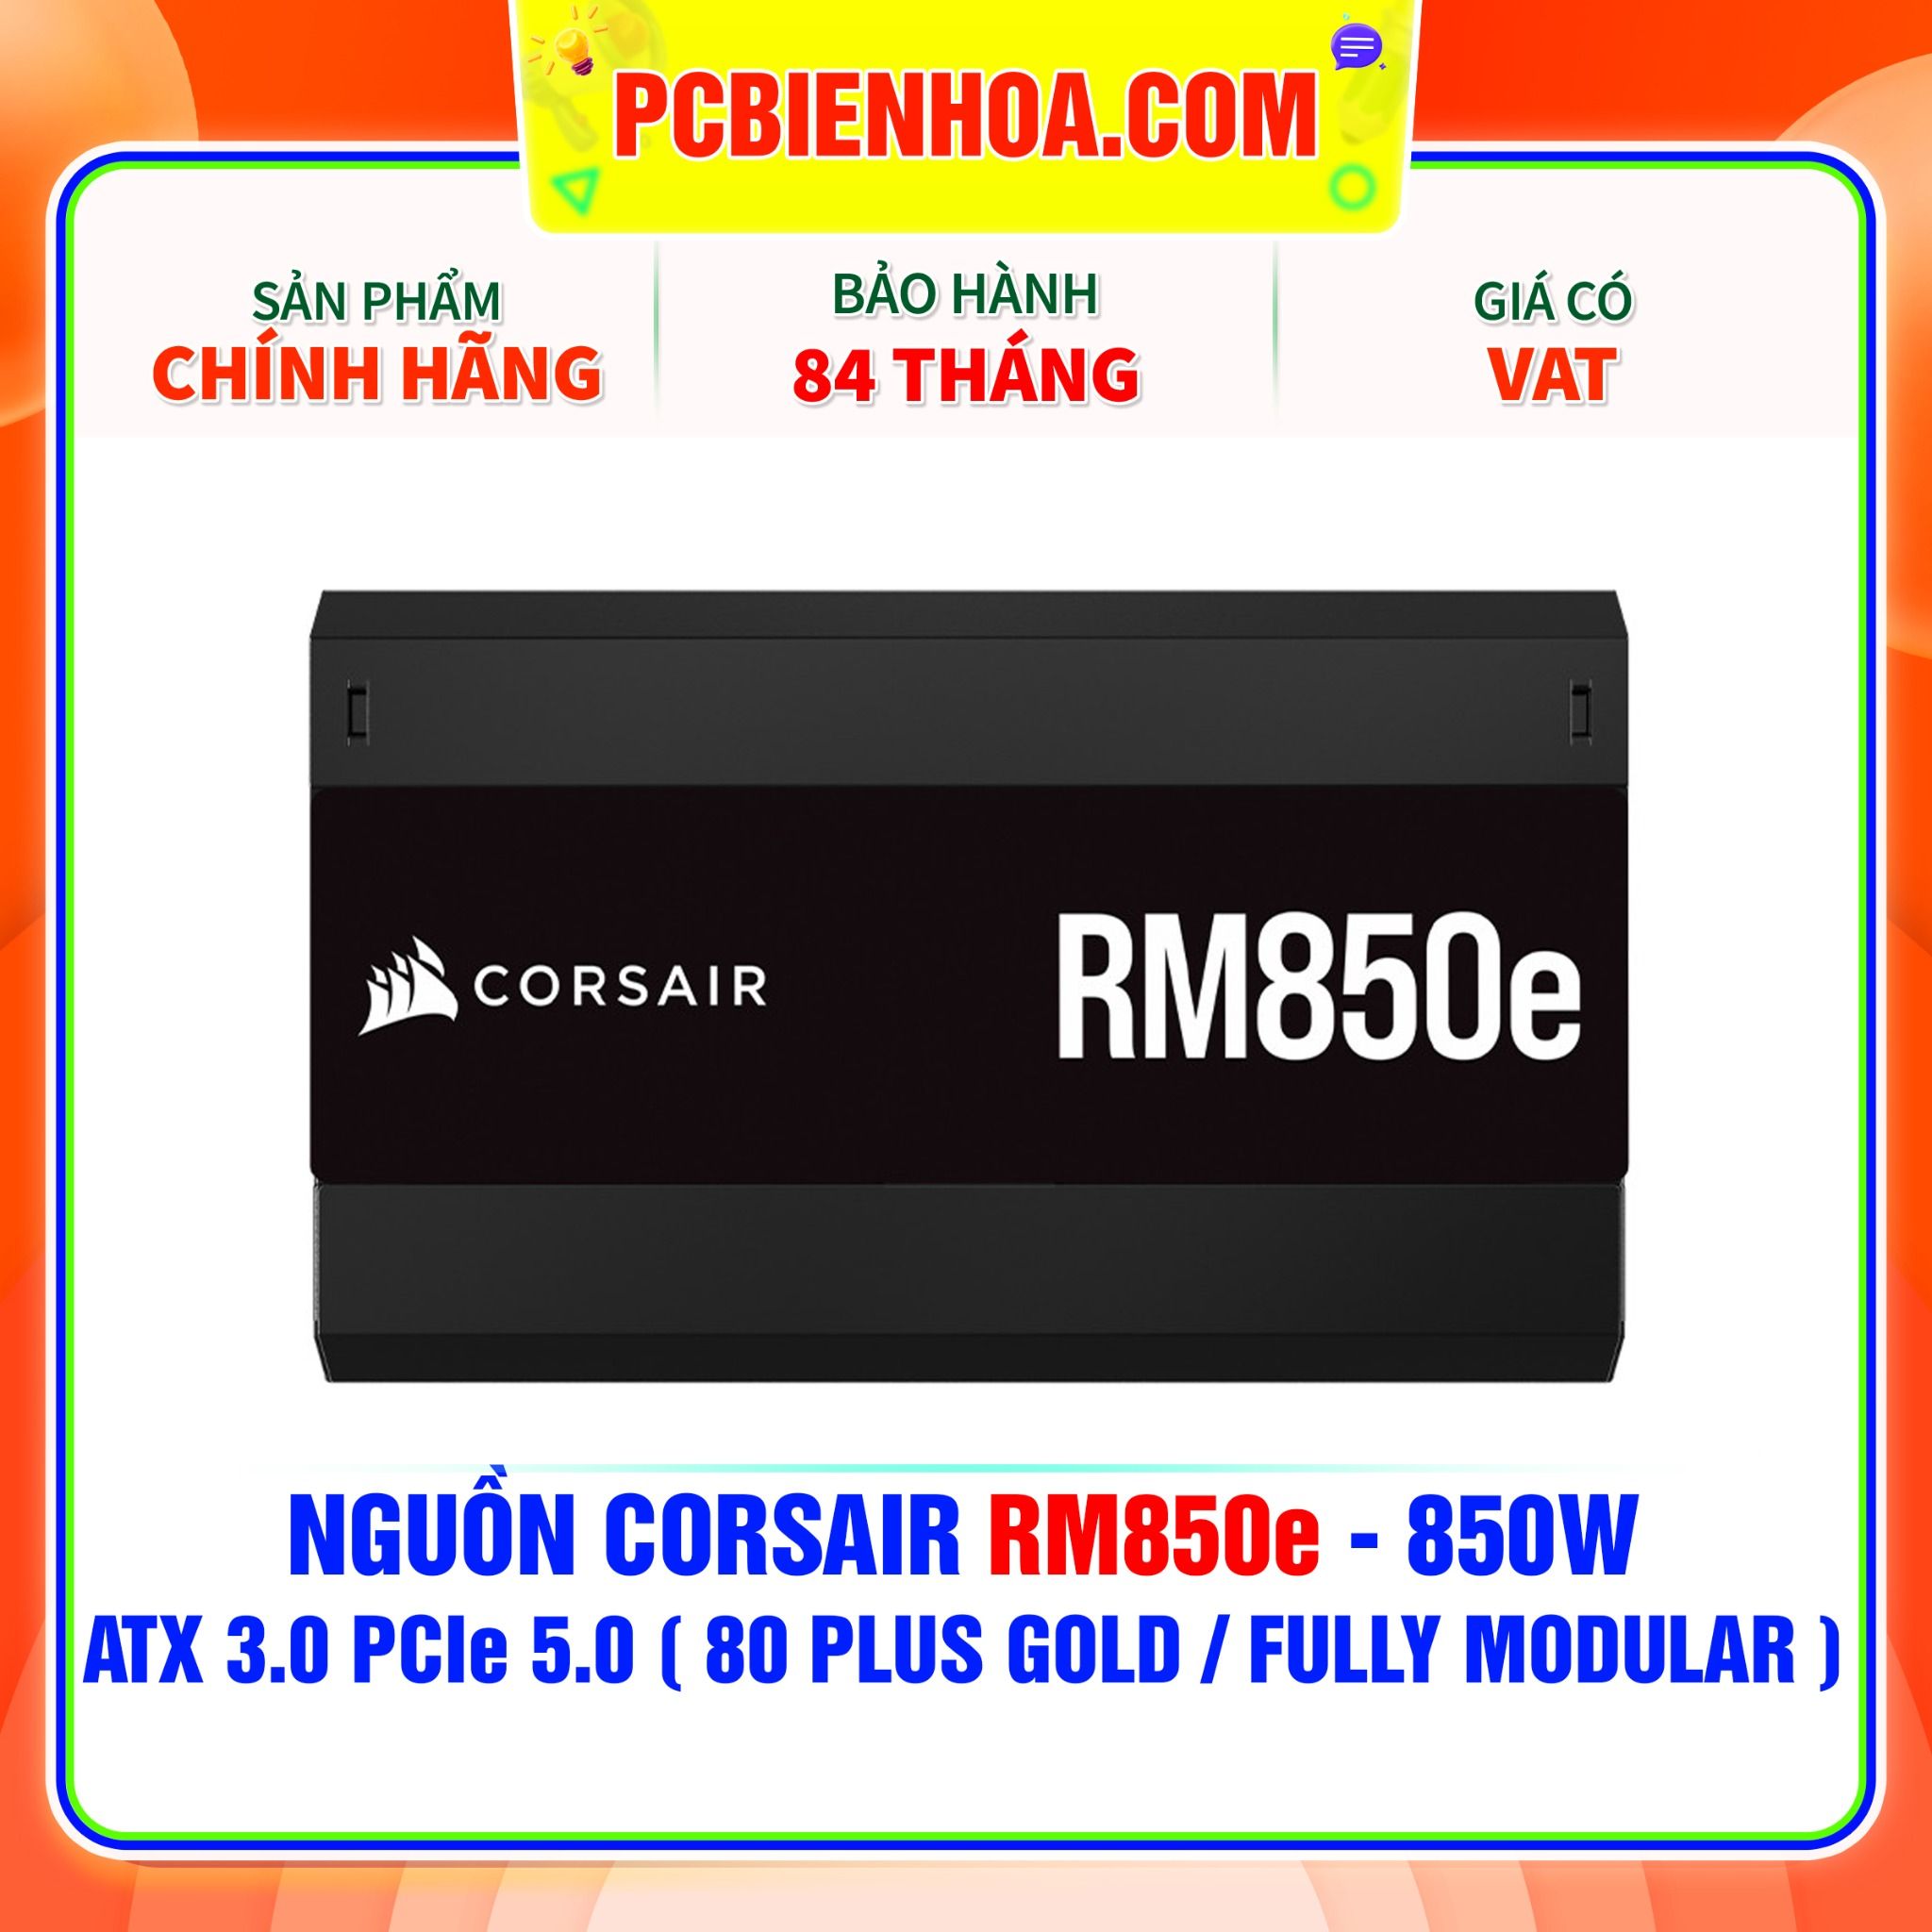  NGUỒN CORSAIR RM850e - 850W ATX 3.0 PCIe 5.0 ( 80 PLUS GOLD / FULLY MODULAR ) 